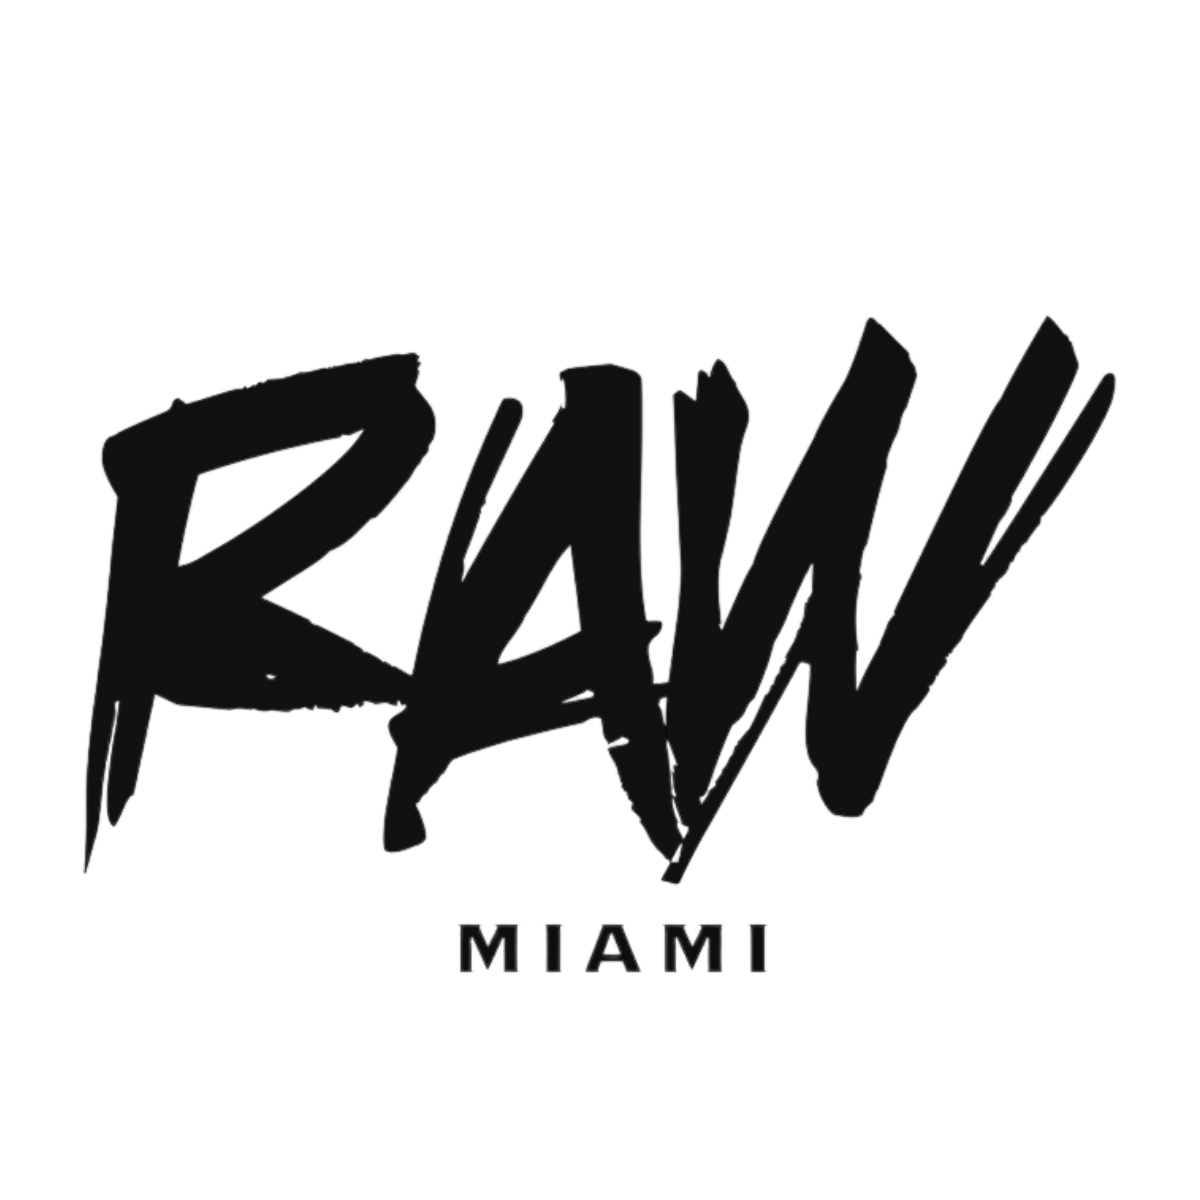 Raw 305